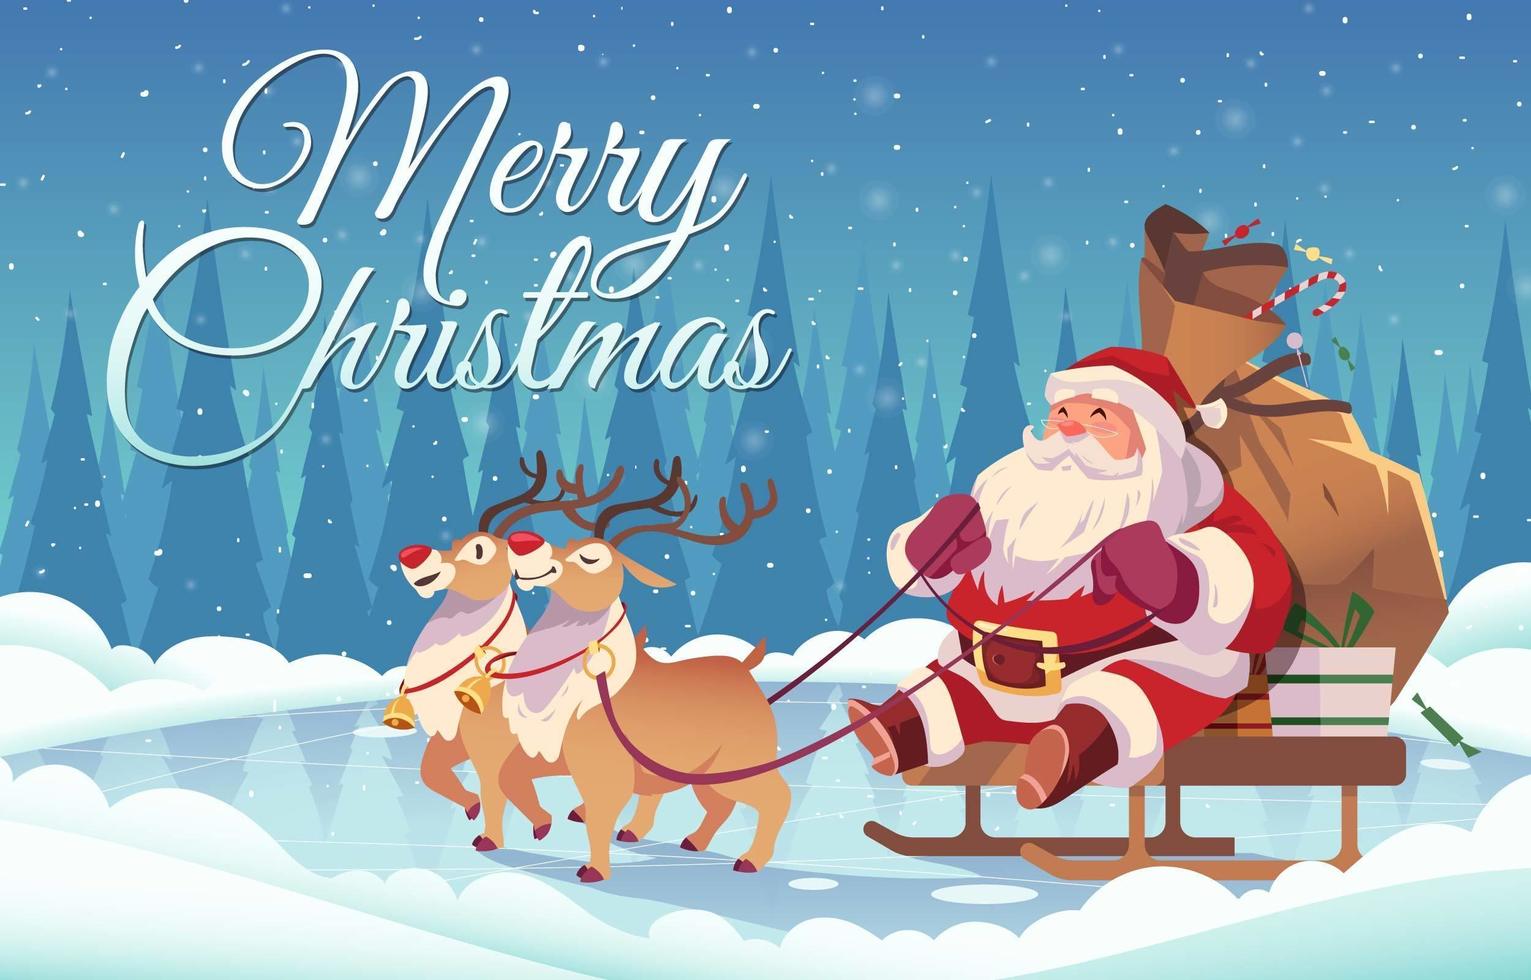 Merry Christmas Design with Santa Claus on Sleigh vector